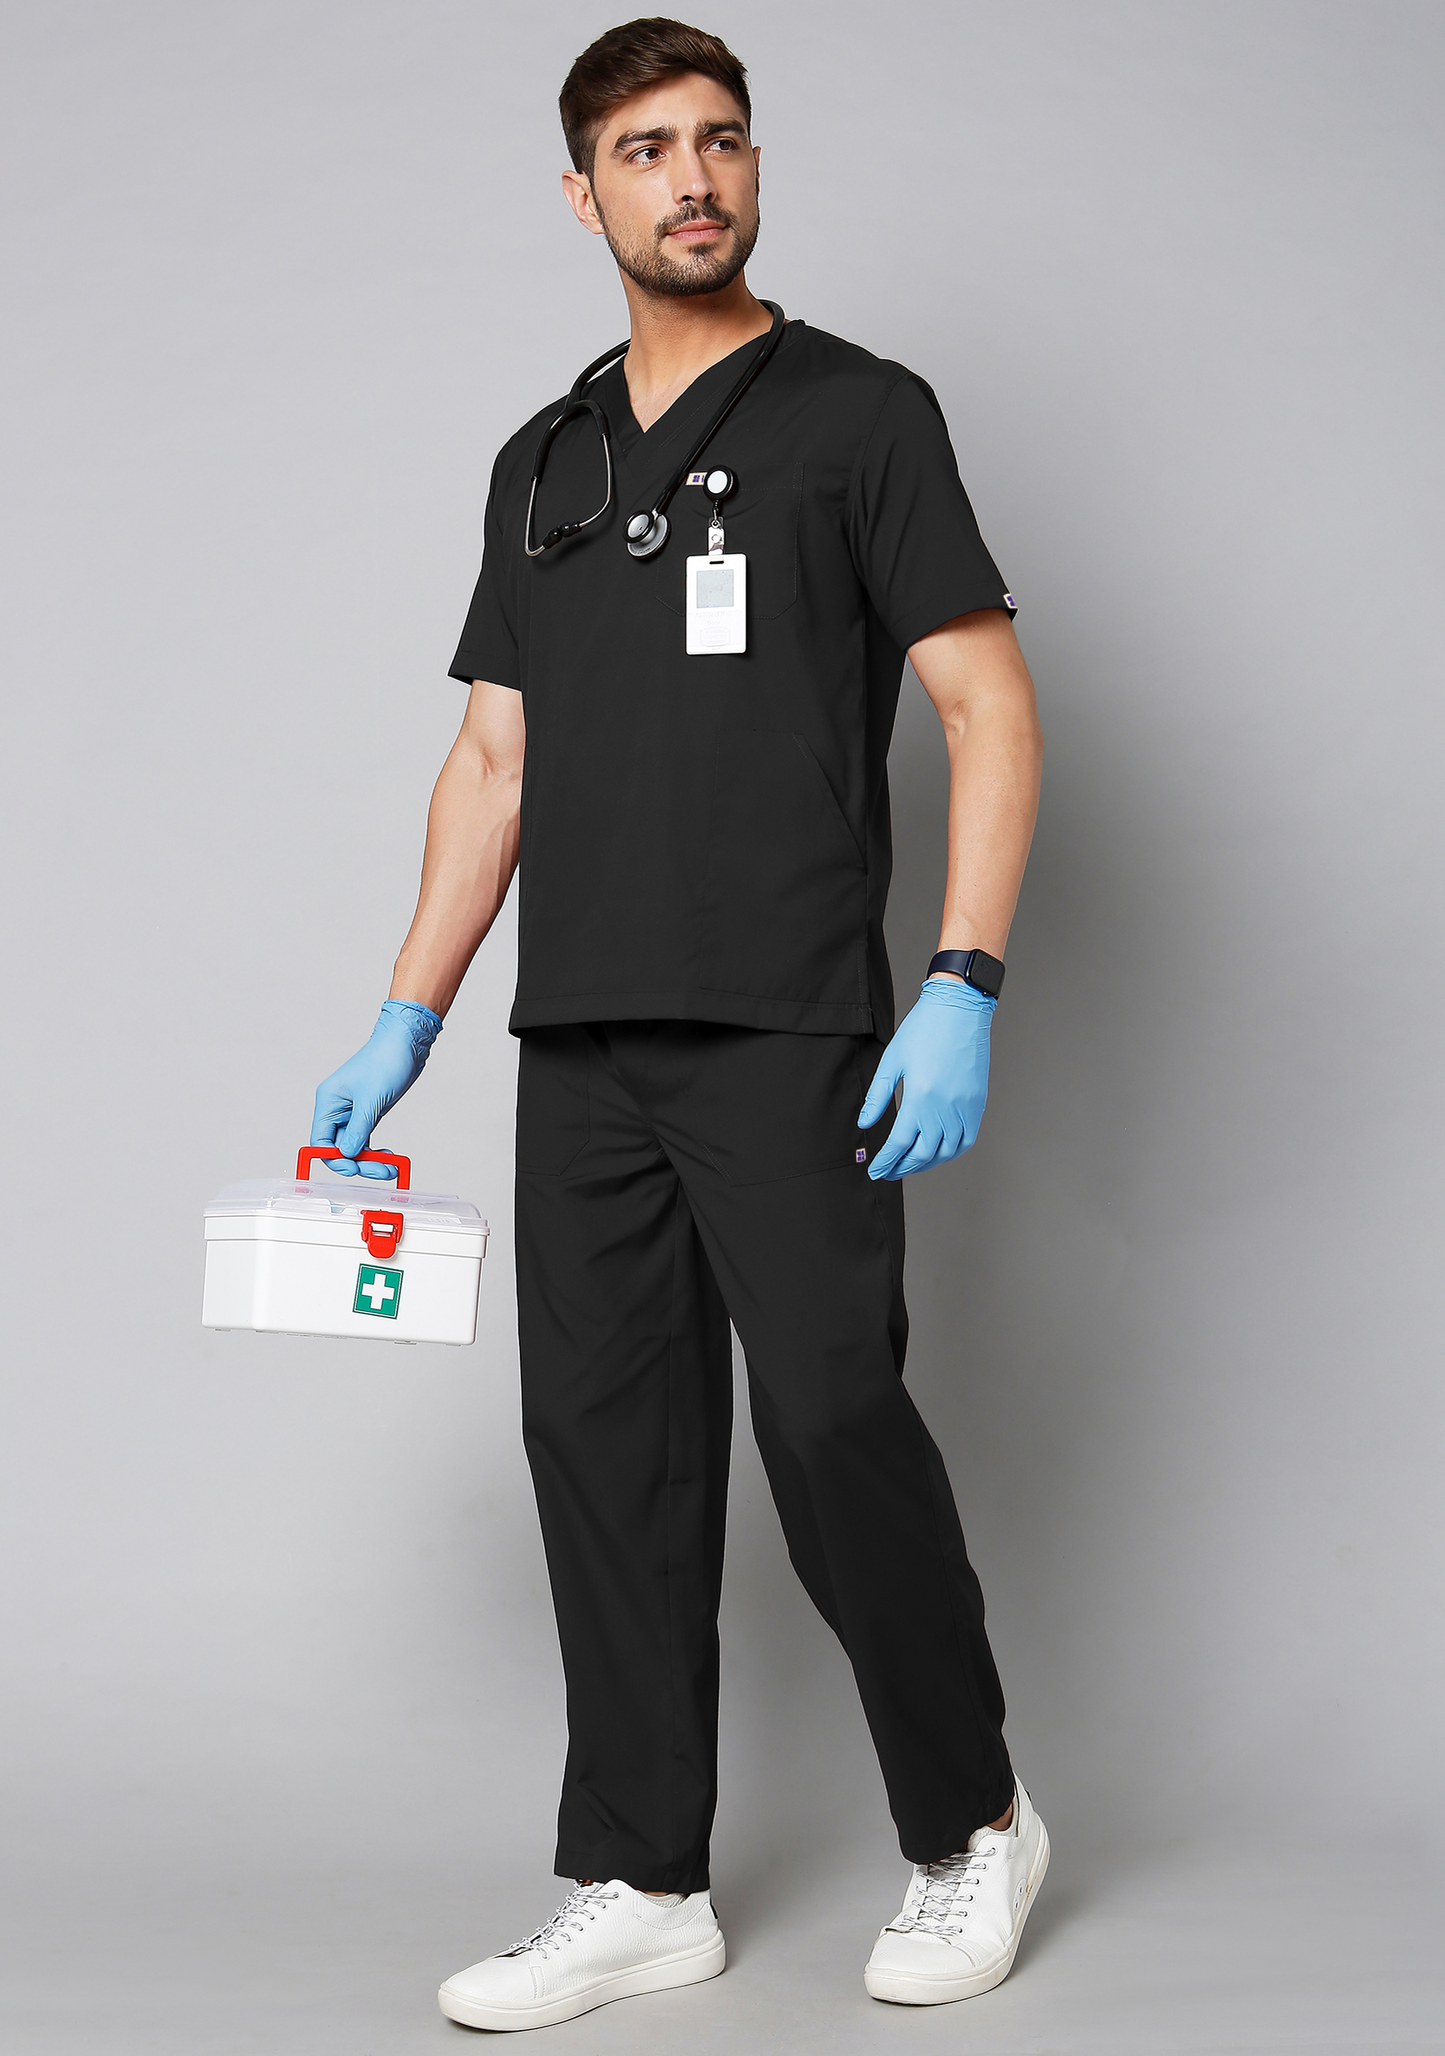 Black Scrubs For Doctors